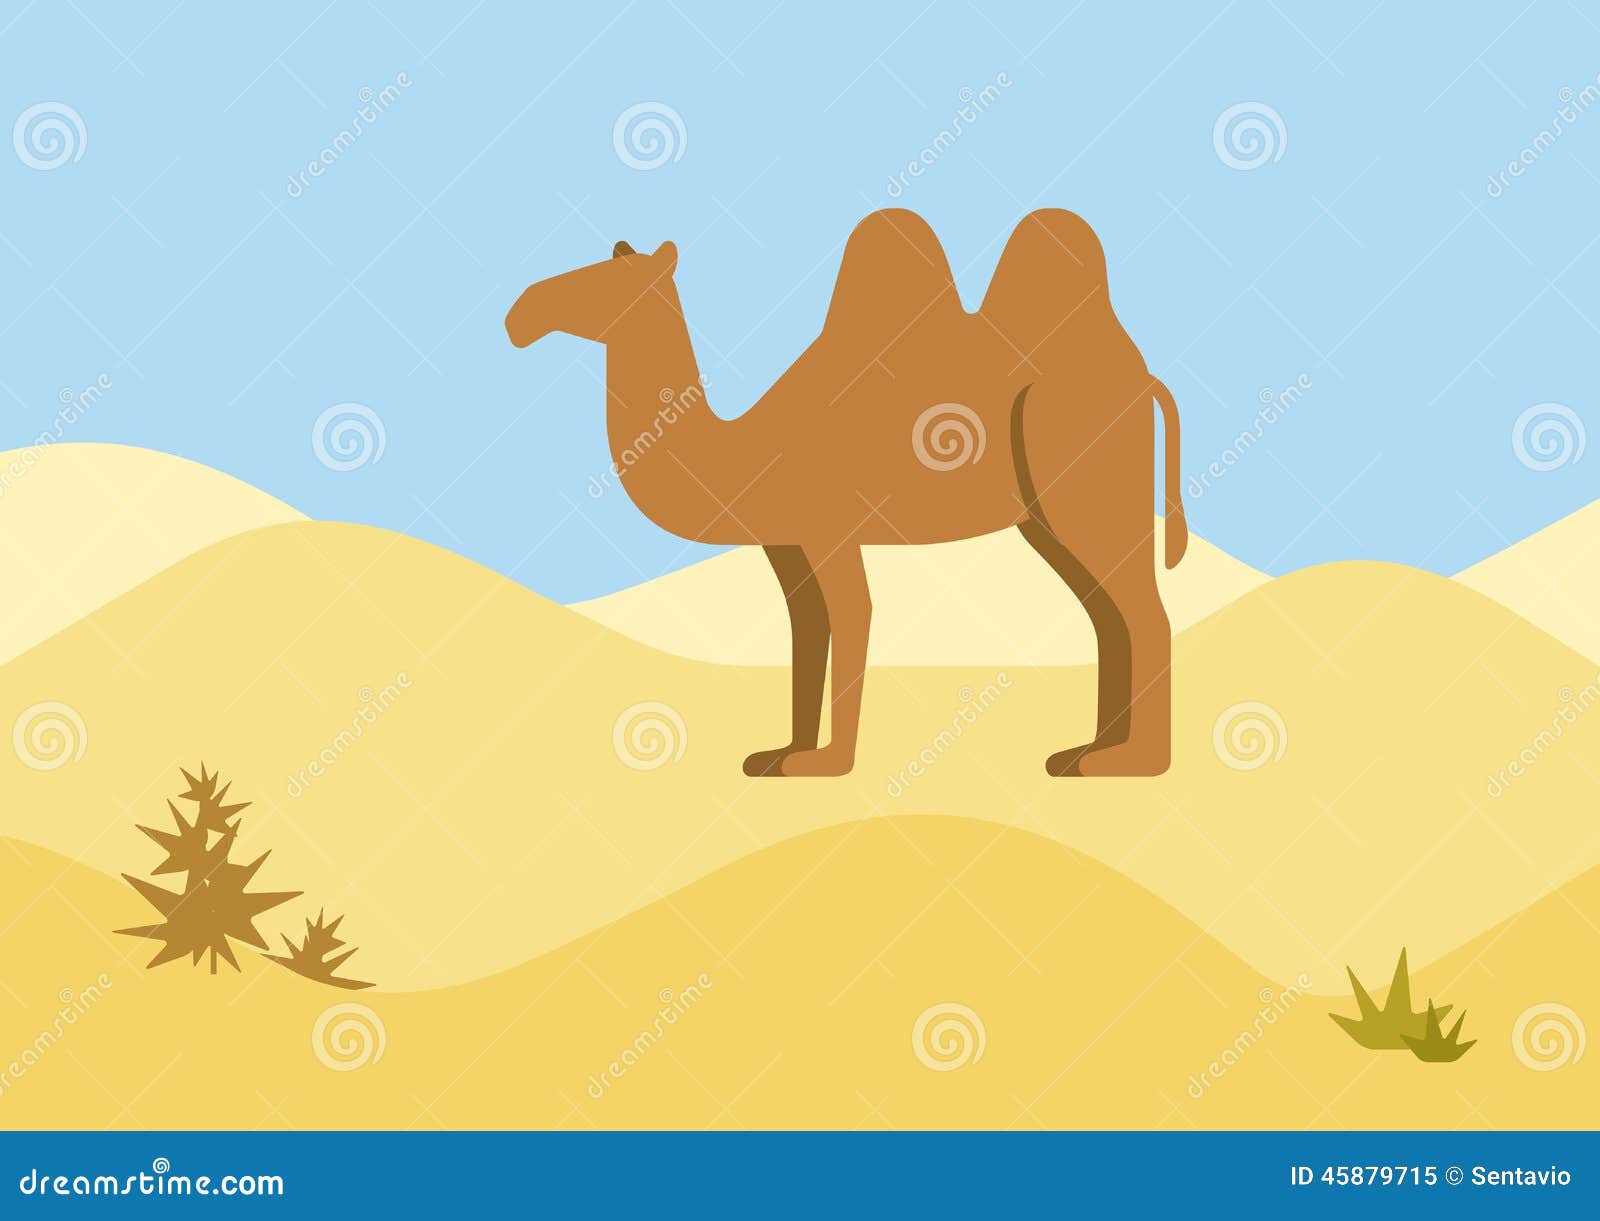 camel desert habitat flat  cartoon  wild animals